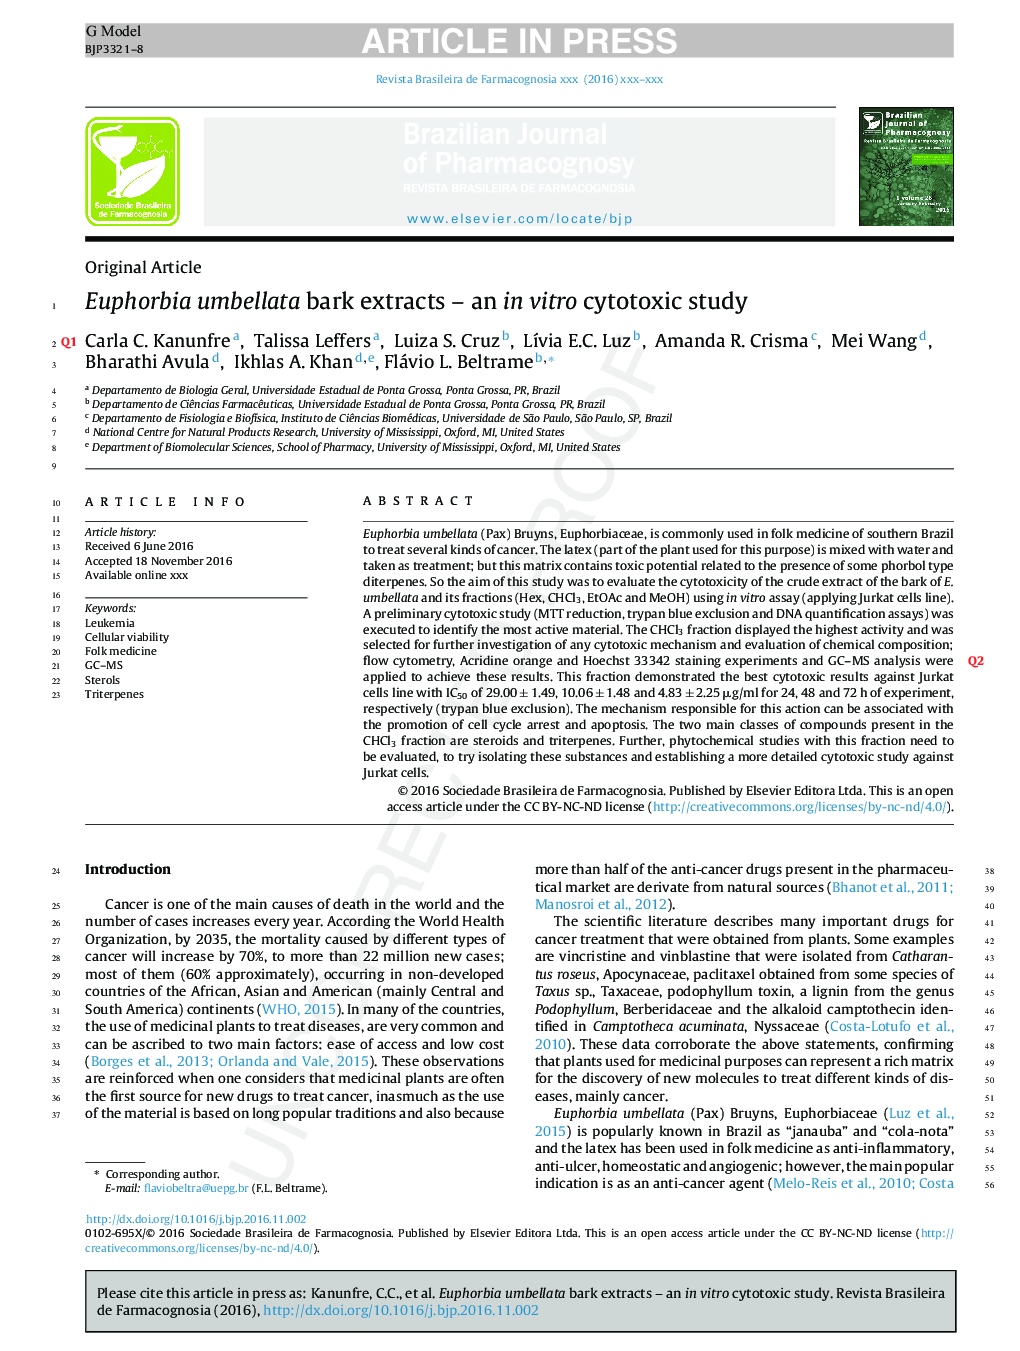 Euphorbia umbellata bark extracts - an in vitro cytotoxic study